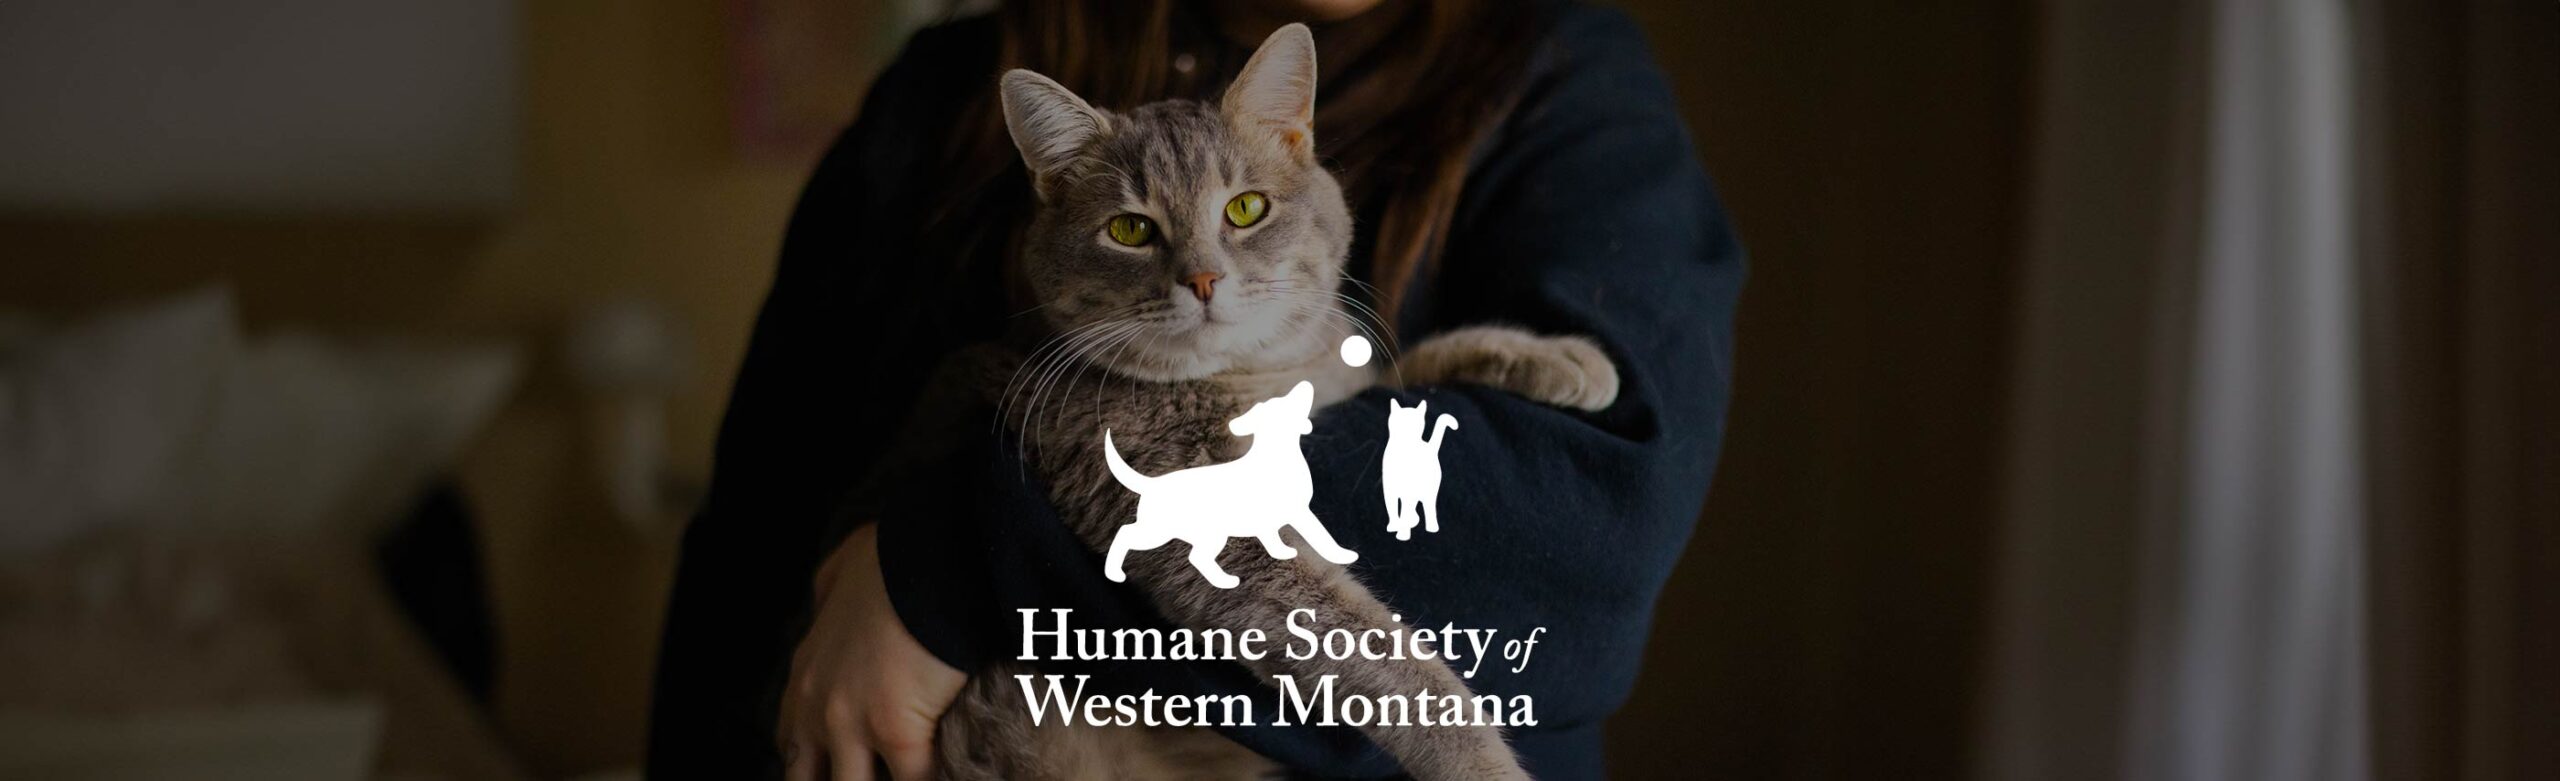 Humane Society Fundraiser